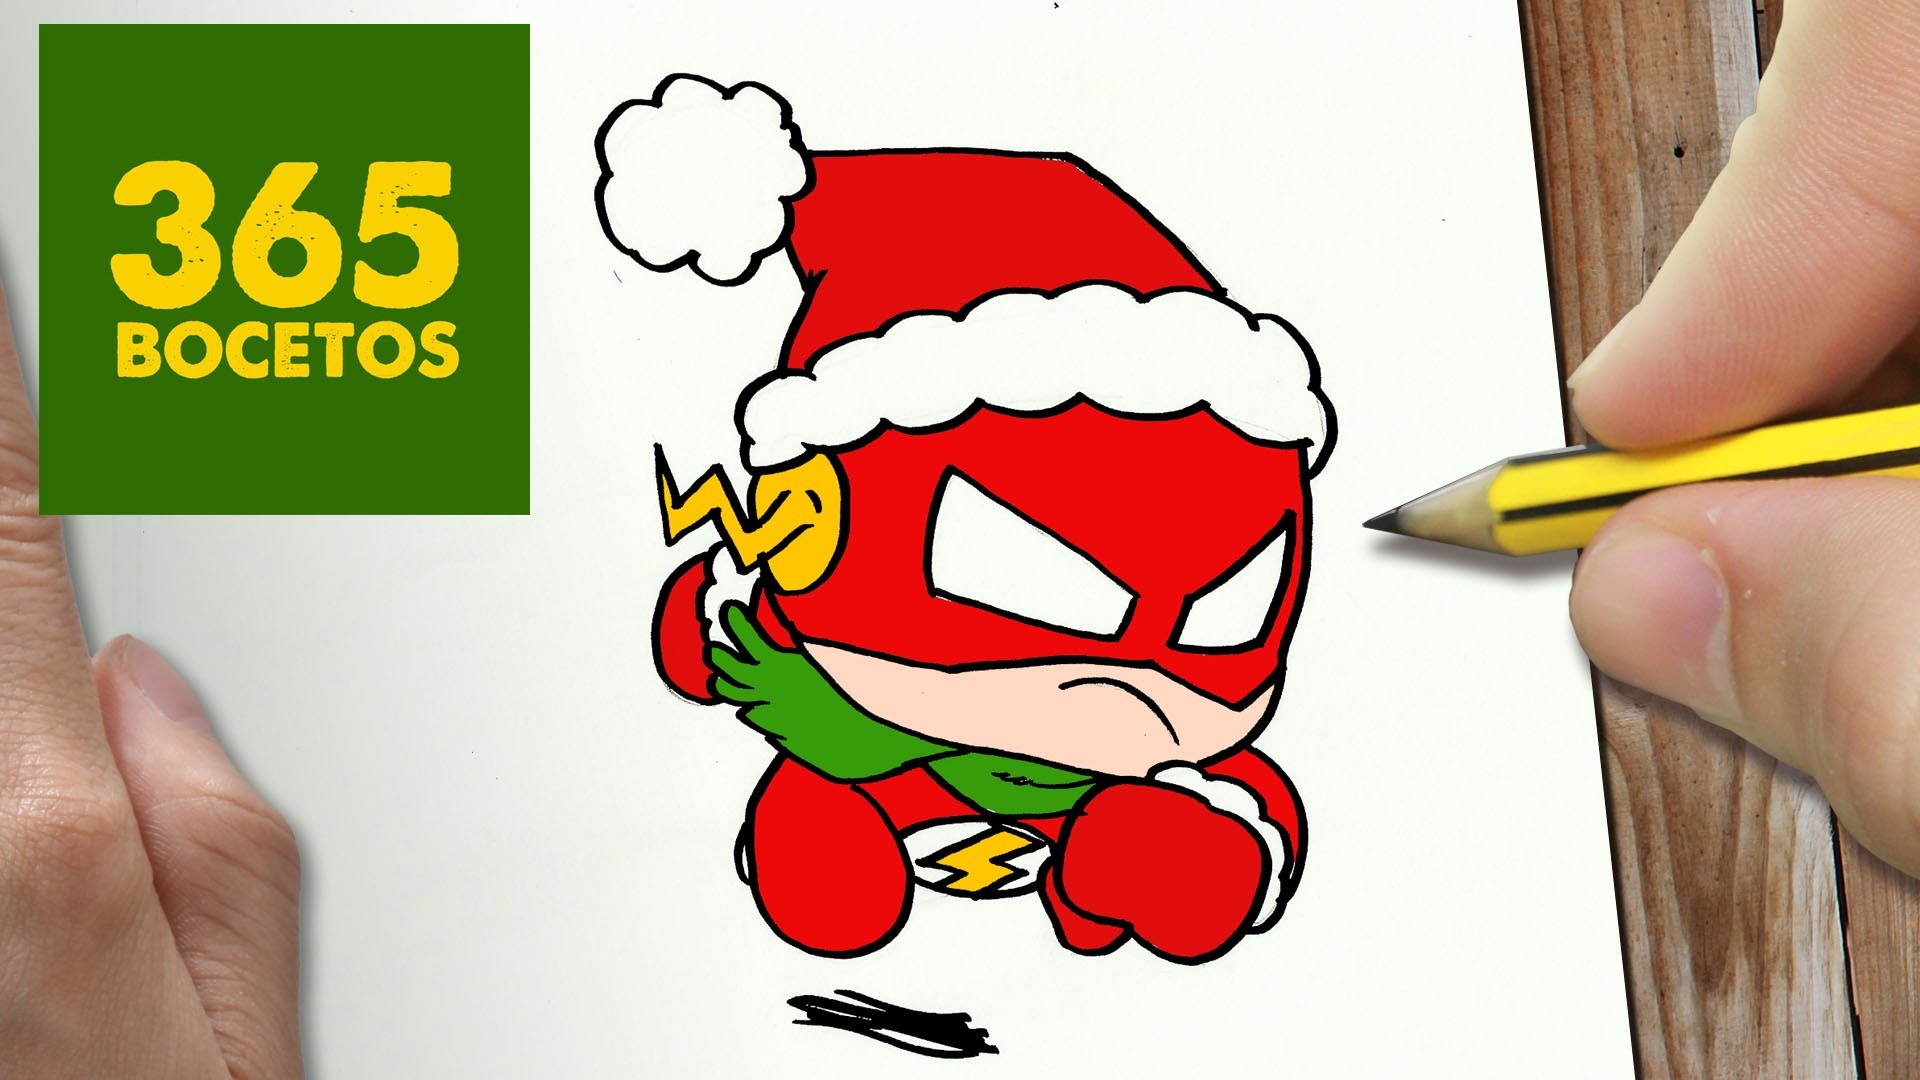 COMO DIBUJAR FLASH PARA NAVIDAD PASO A PASO: Dibujos kawaii navideños - How to draw a Flash